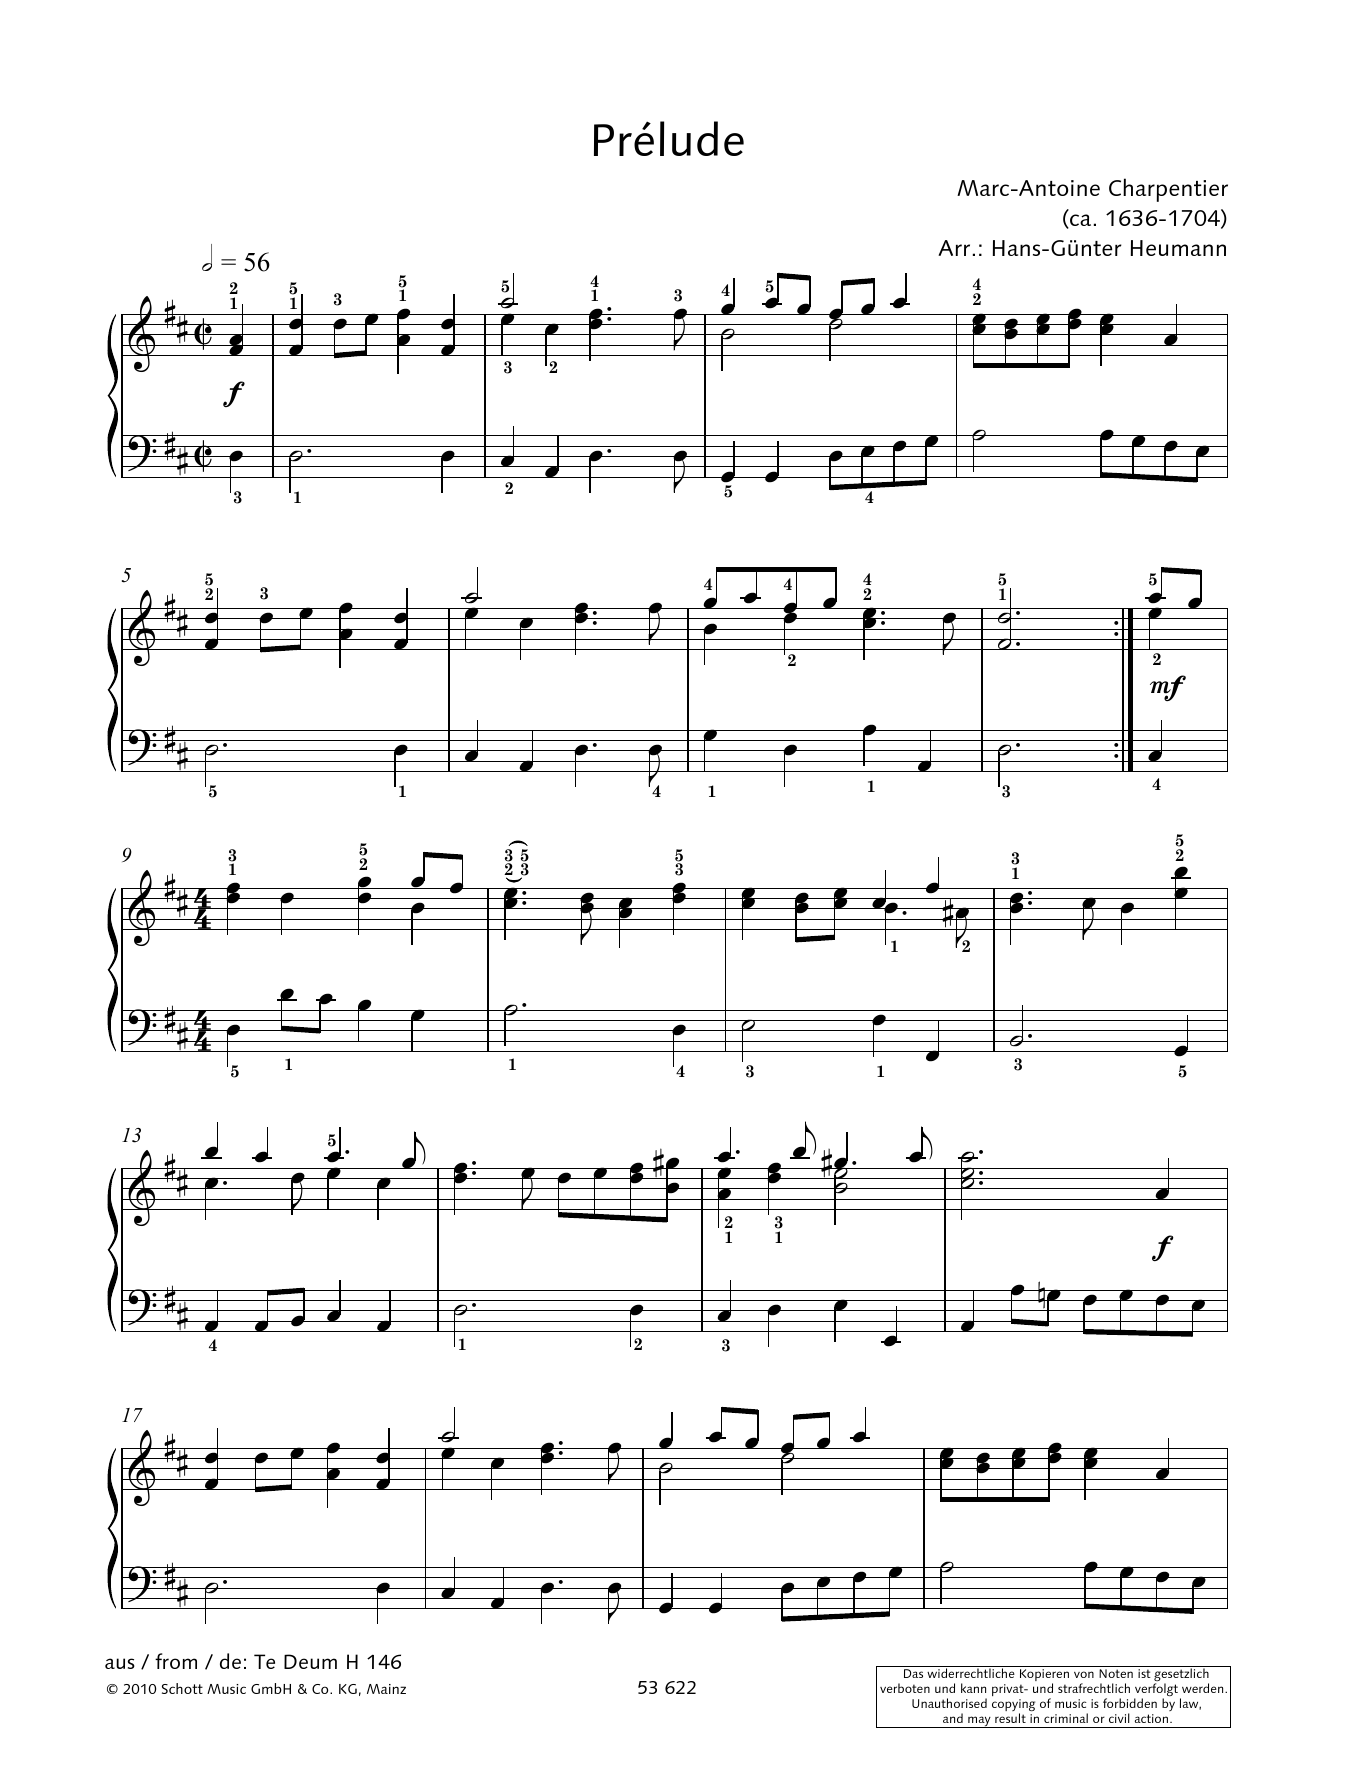 Hans-Gunter Heumann Prélude sheet music notes and chords arranged for Piano Solo